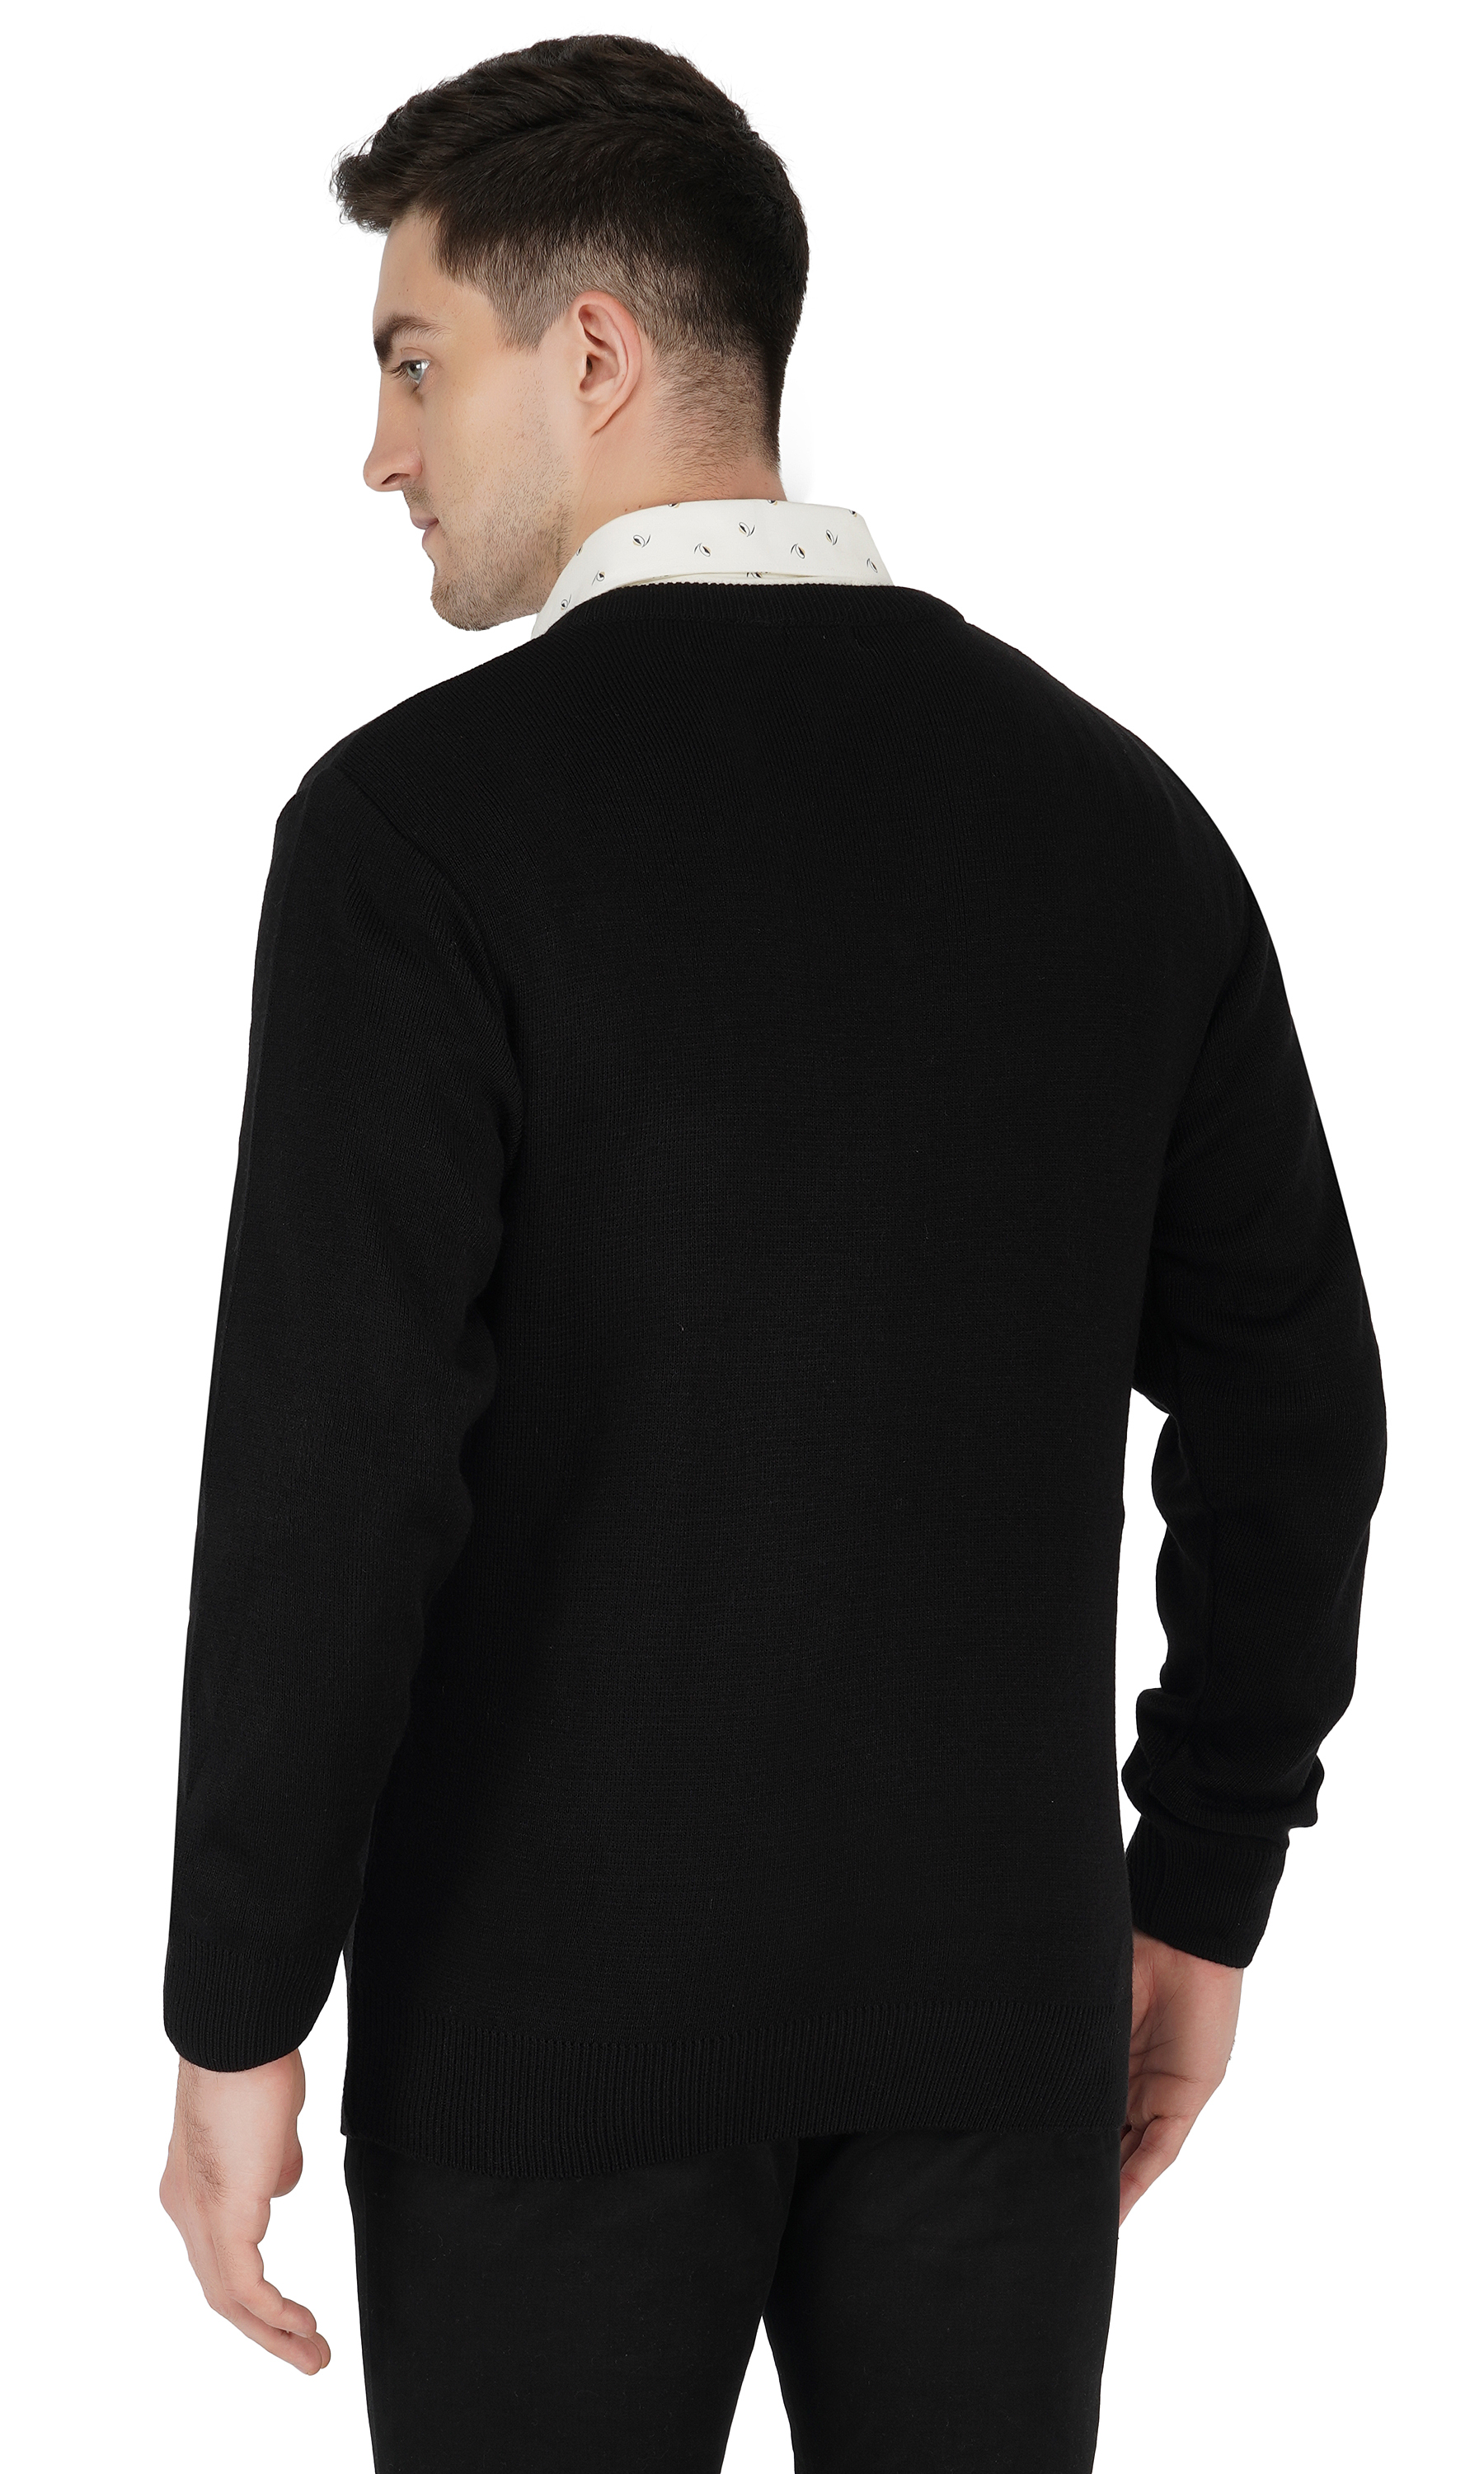 Black Woollen Uniform sweater